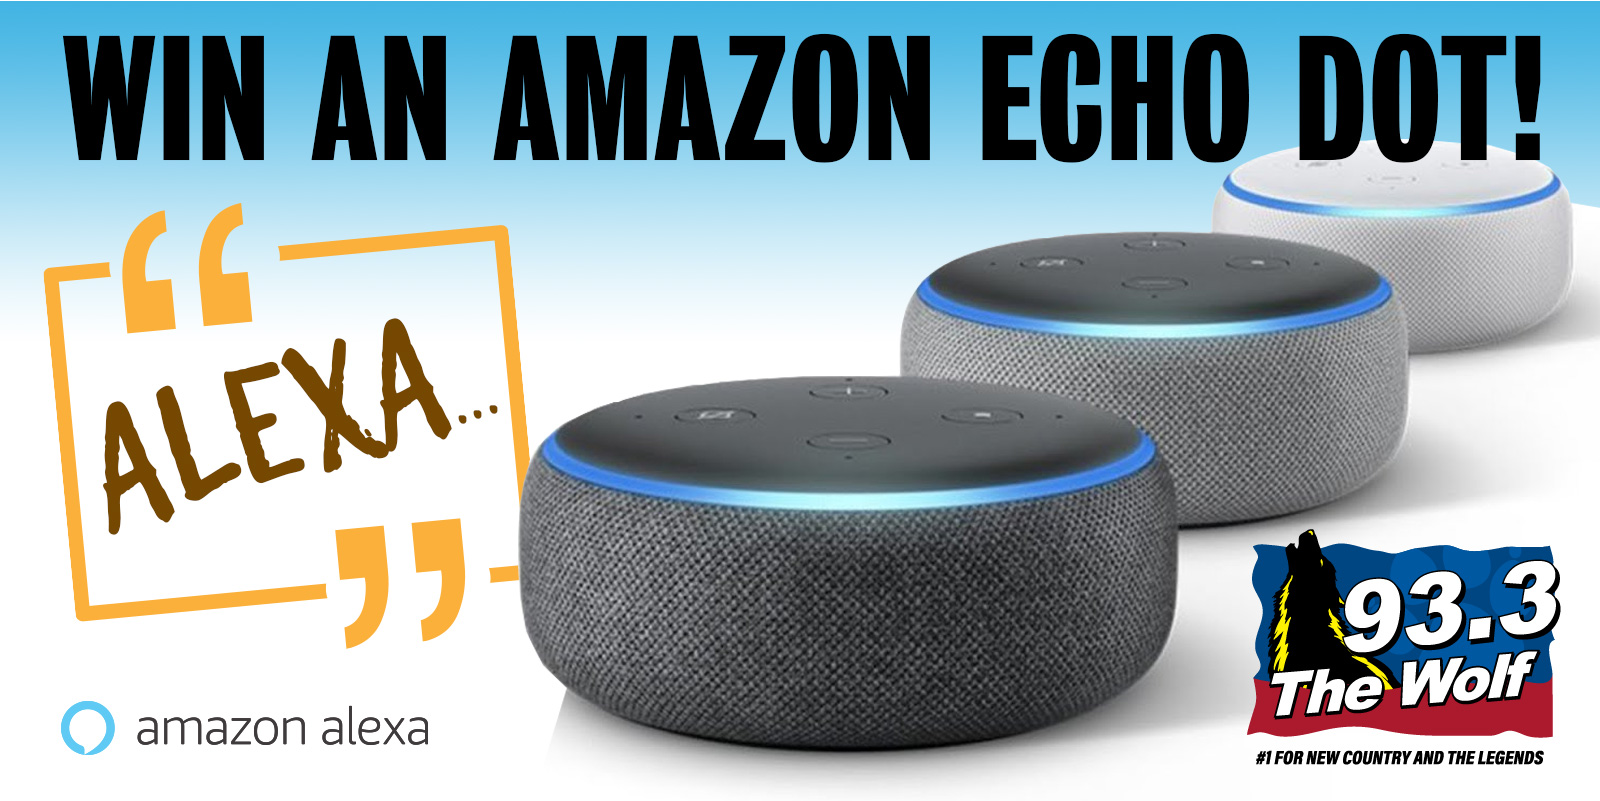 Here’s How to Win An Amazon Echo Dot